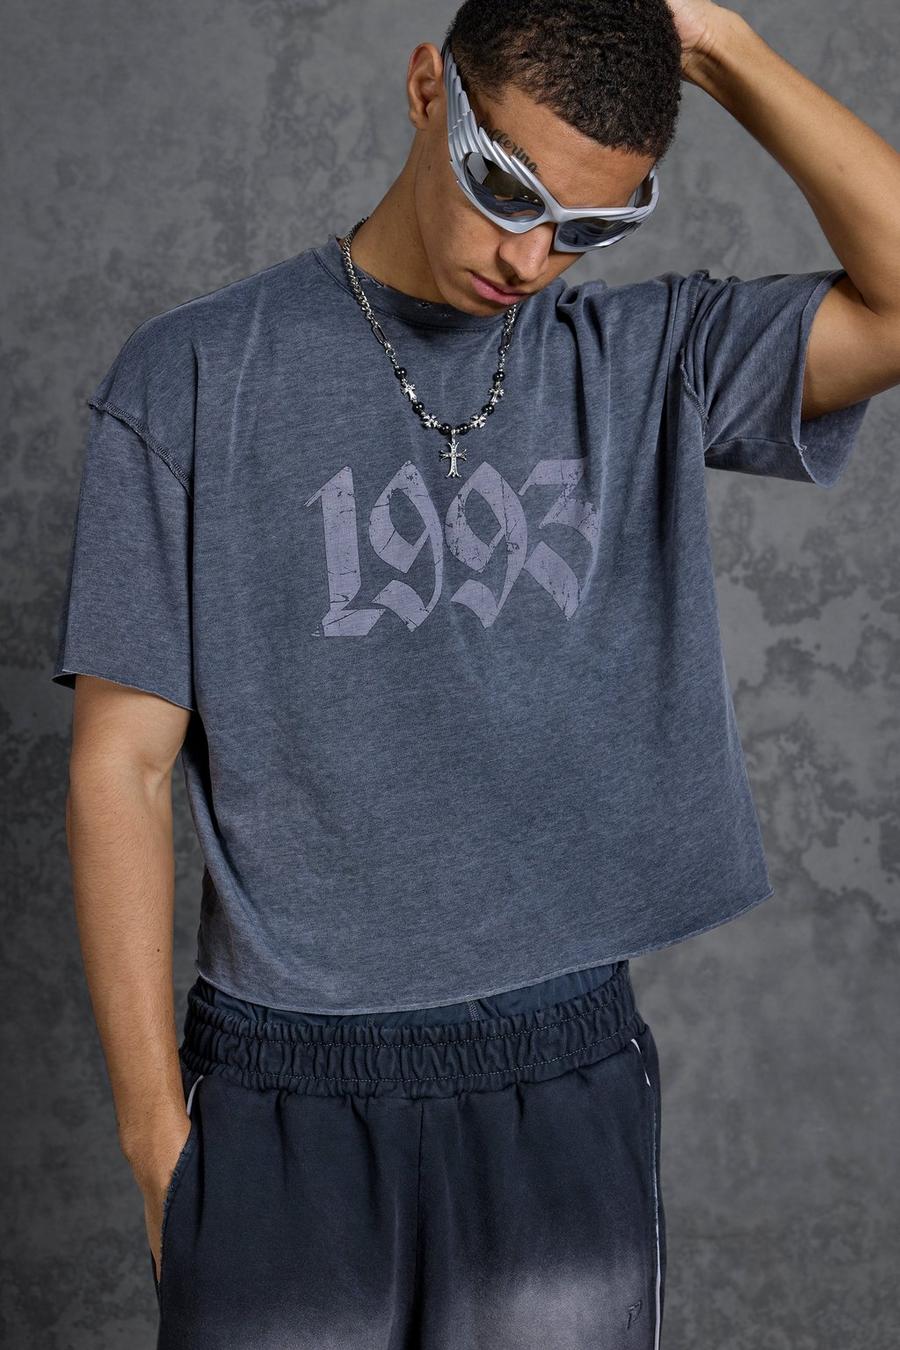 Gunna - Oversize-T-Shirt 1993 im Burnout-Look, Charcoal